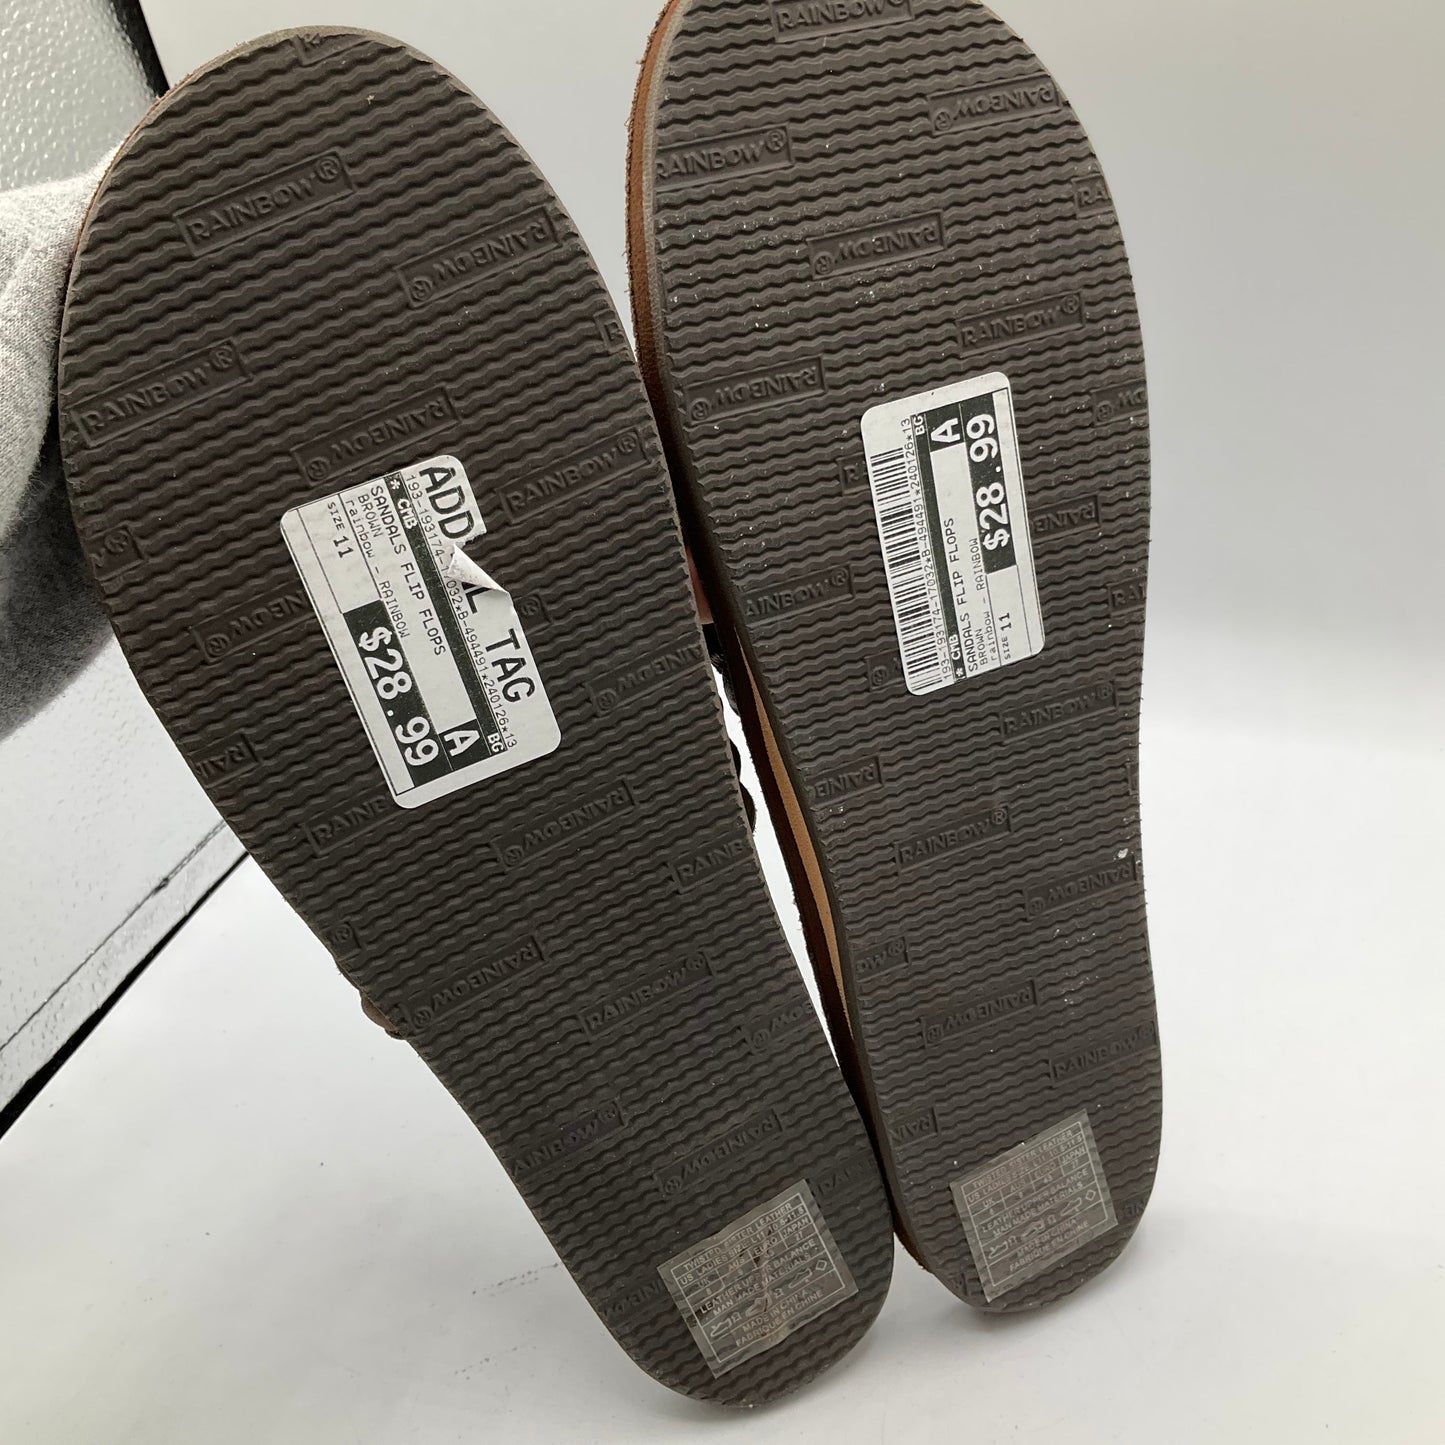 Sandals Flip Flops By Cmb  Size: 11